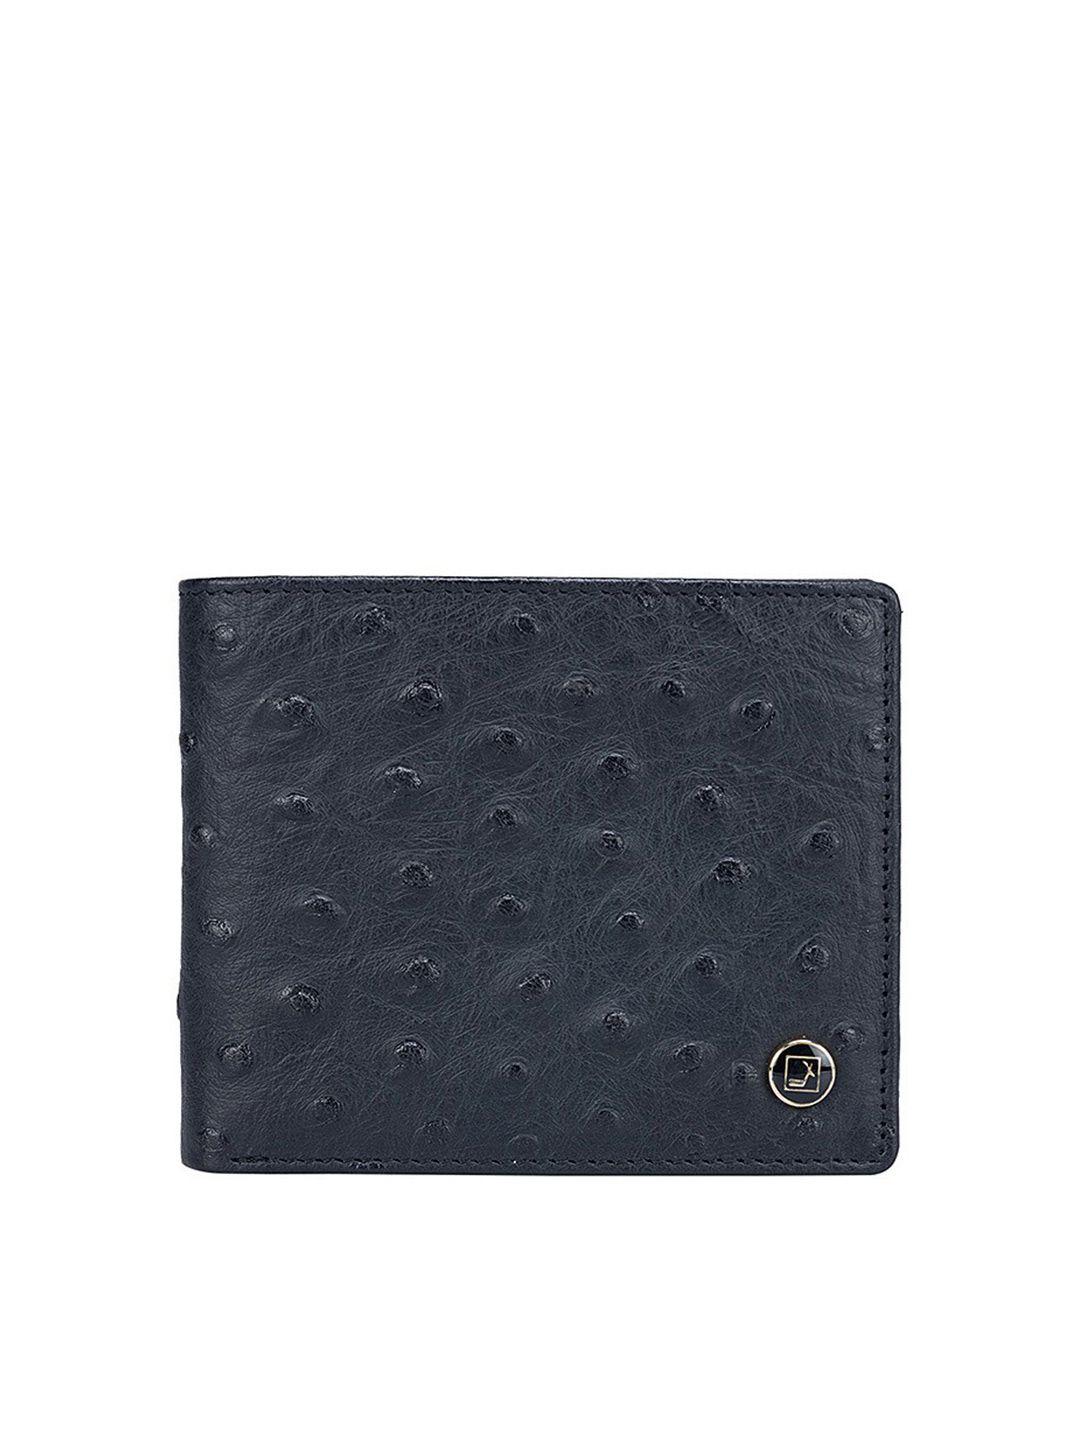 da milano men black & grey textured leather two fold wallet